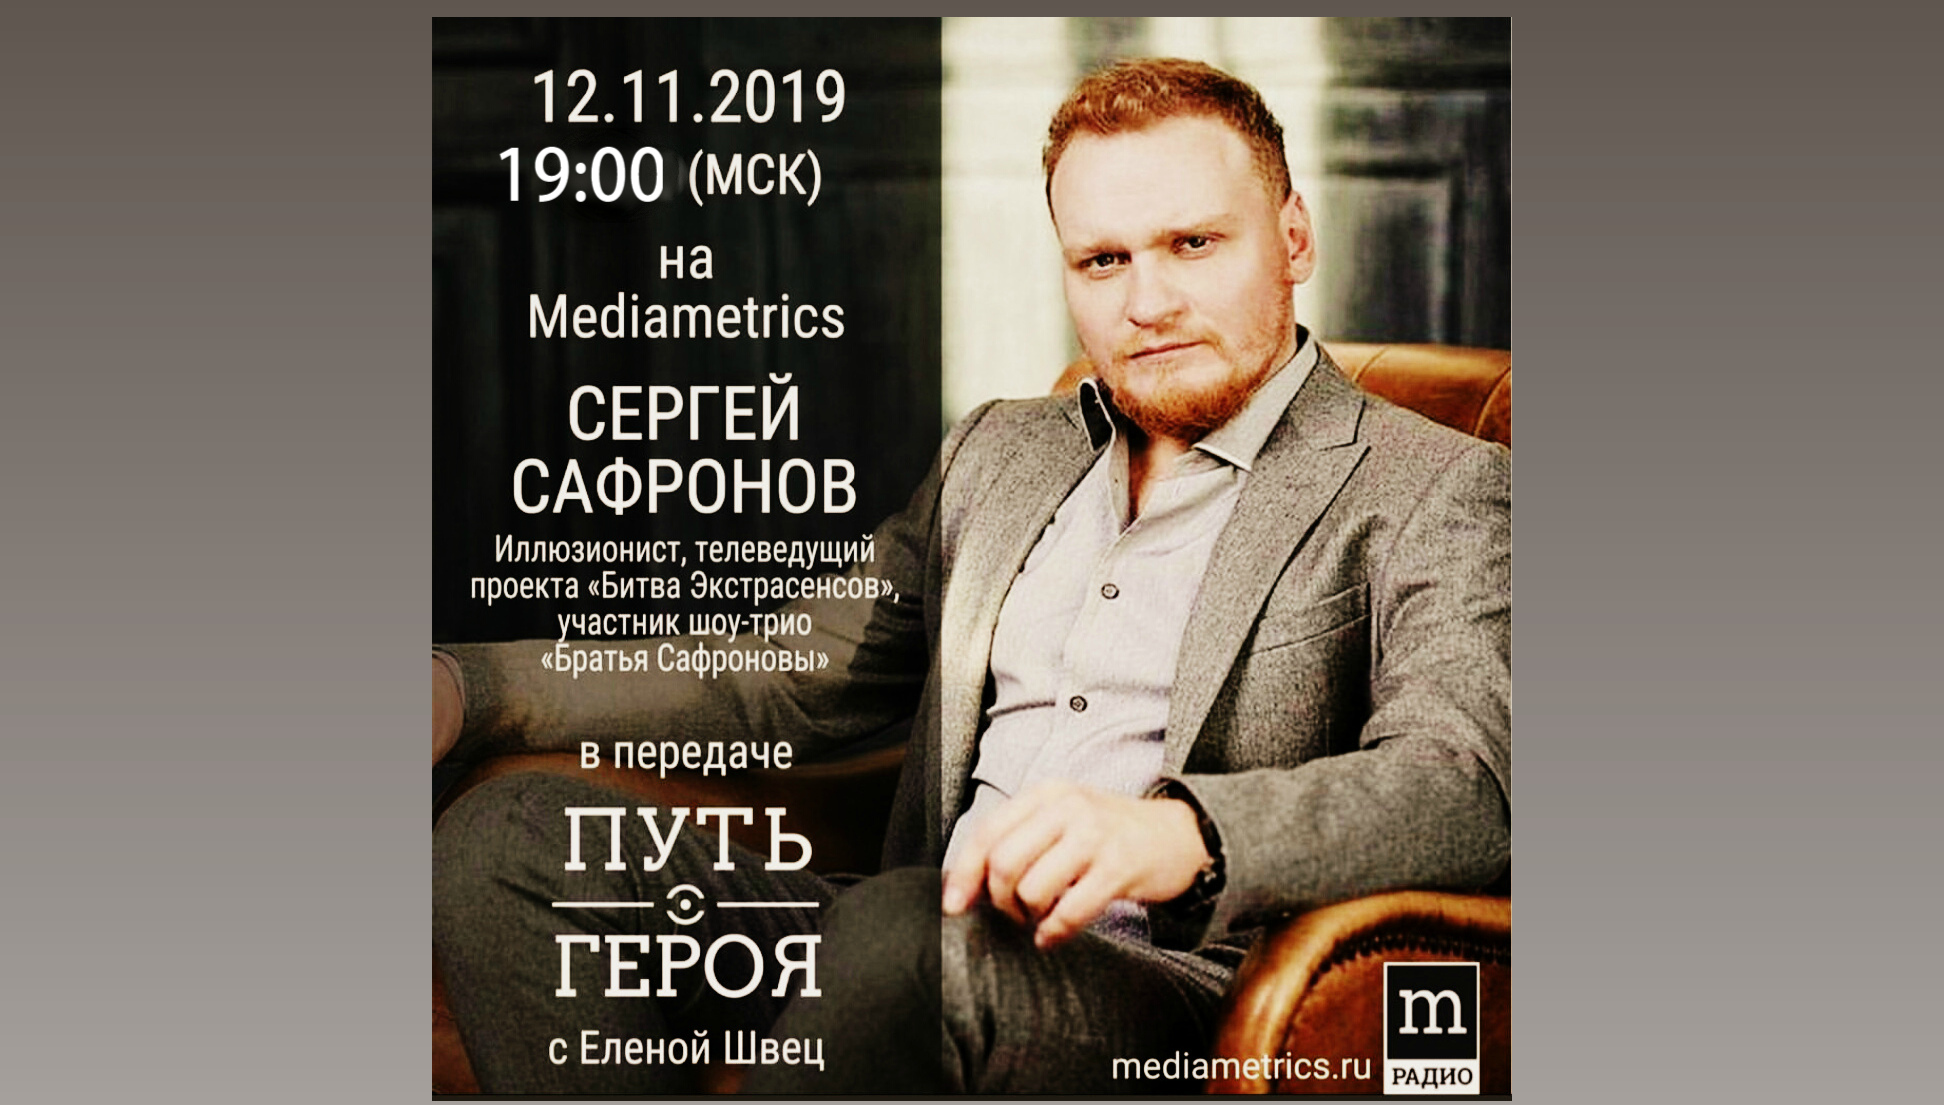  Сергей Сафронов на радио "Mediametrics"